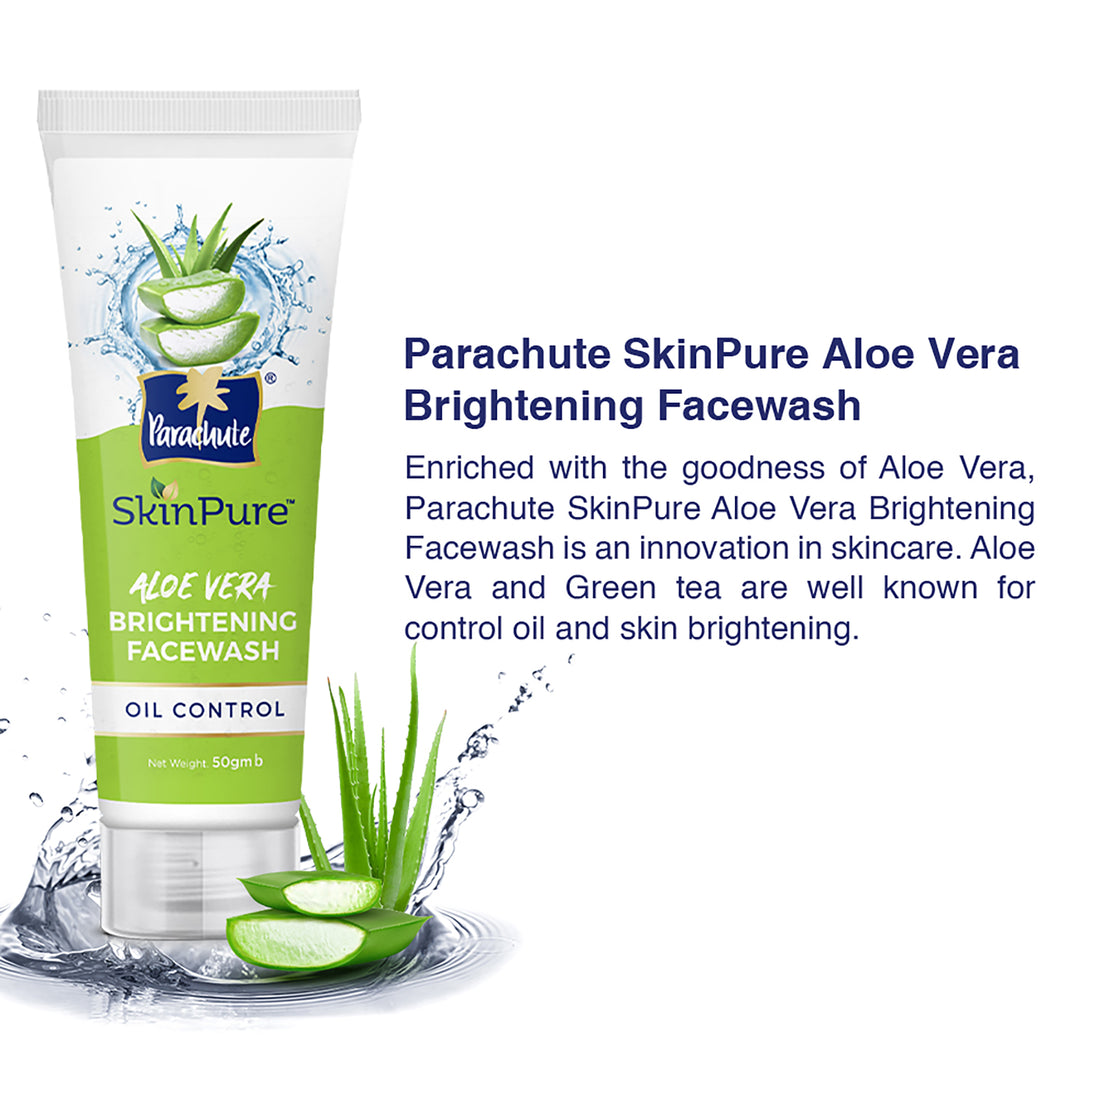 Parachute SkinPure Aloe Vera Brightening Facewash (Oil Control)